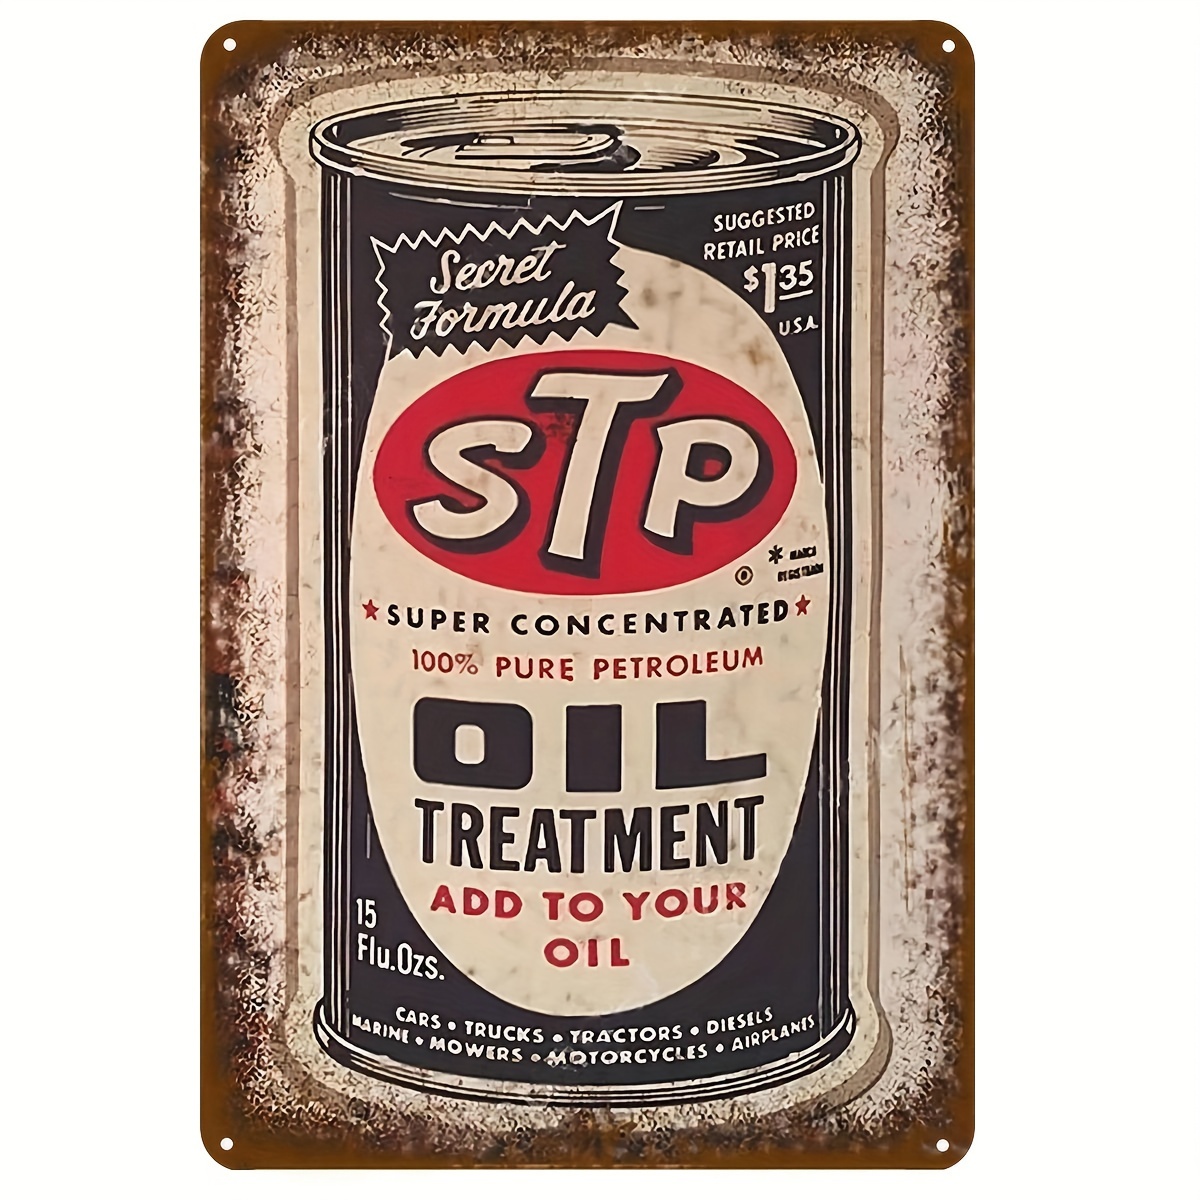 

Stp Oil Vintage Metal Tin Sign (8"x12") - Rustic Iron Wall Art Decor For University, Bathroom, Bar, Cafe, Garage, Farmhouse, Gas Station, Repair Shop - Man Cave Gift Poster - White, Black